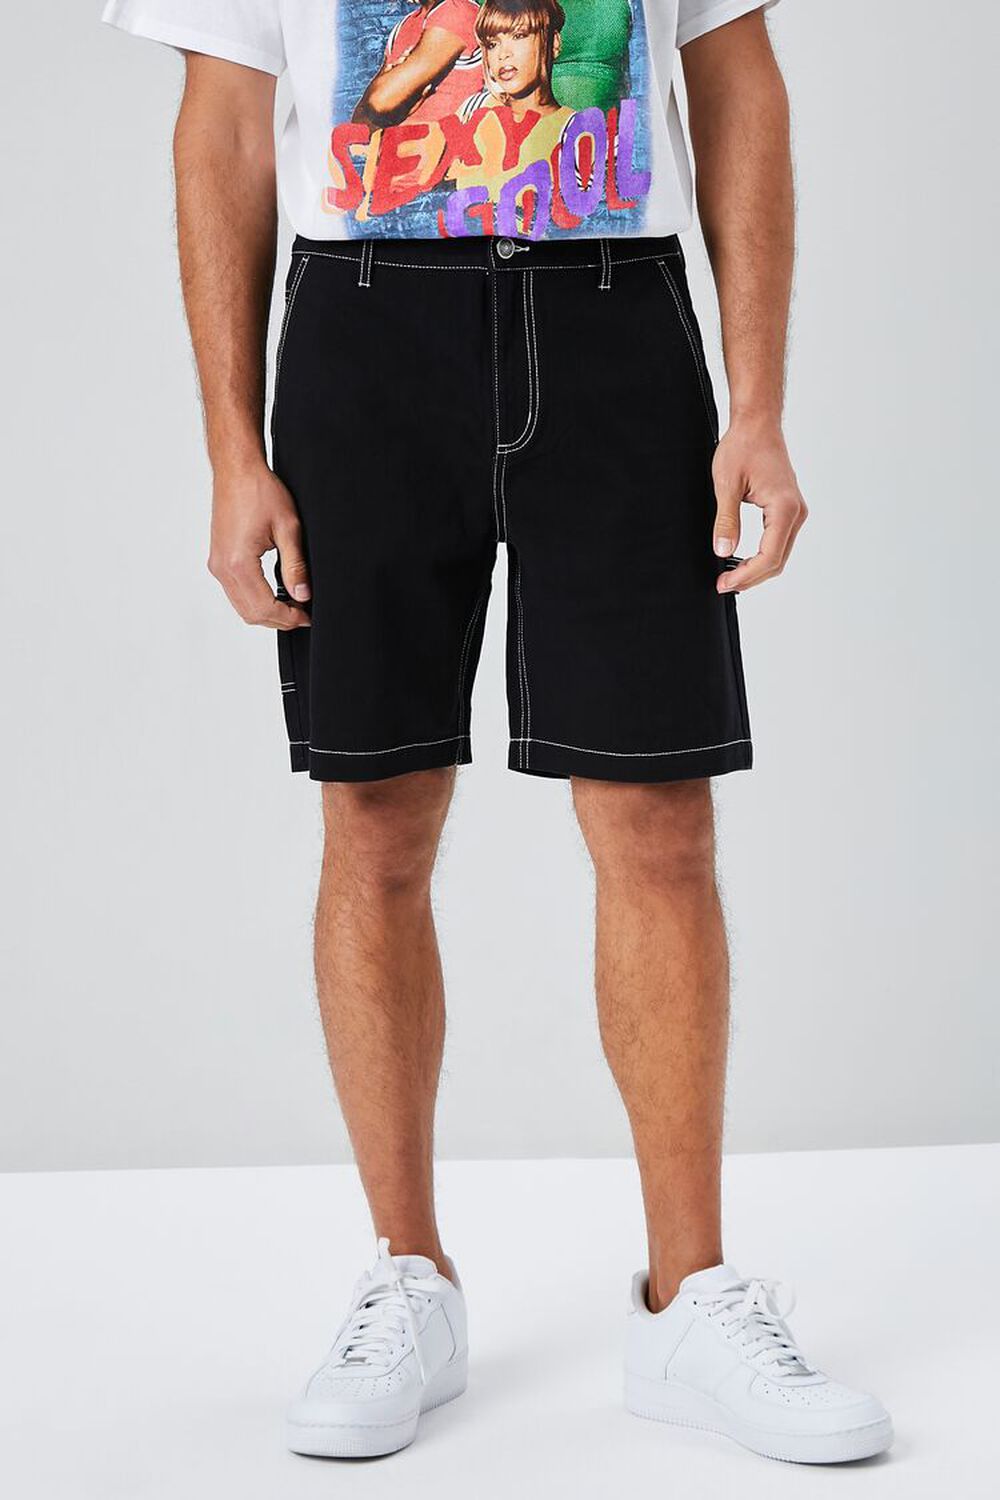 BLACK/WHITE Contrast-Stitch Utility Shorts, image 2